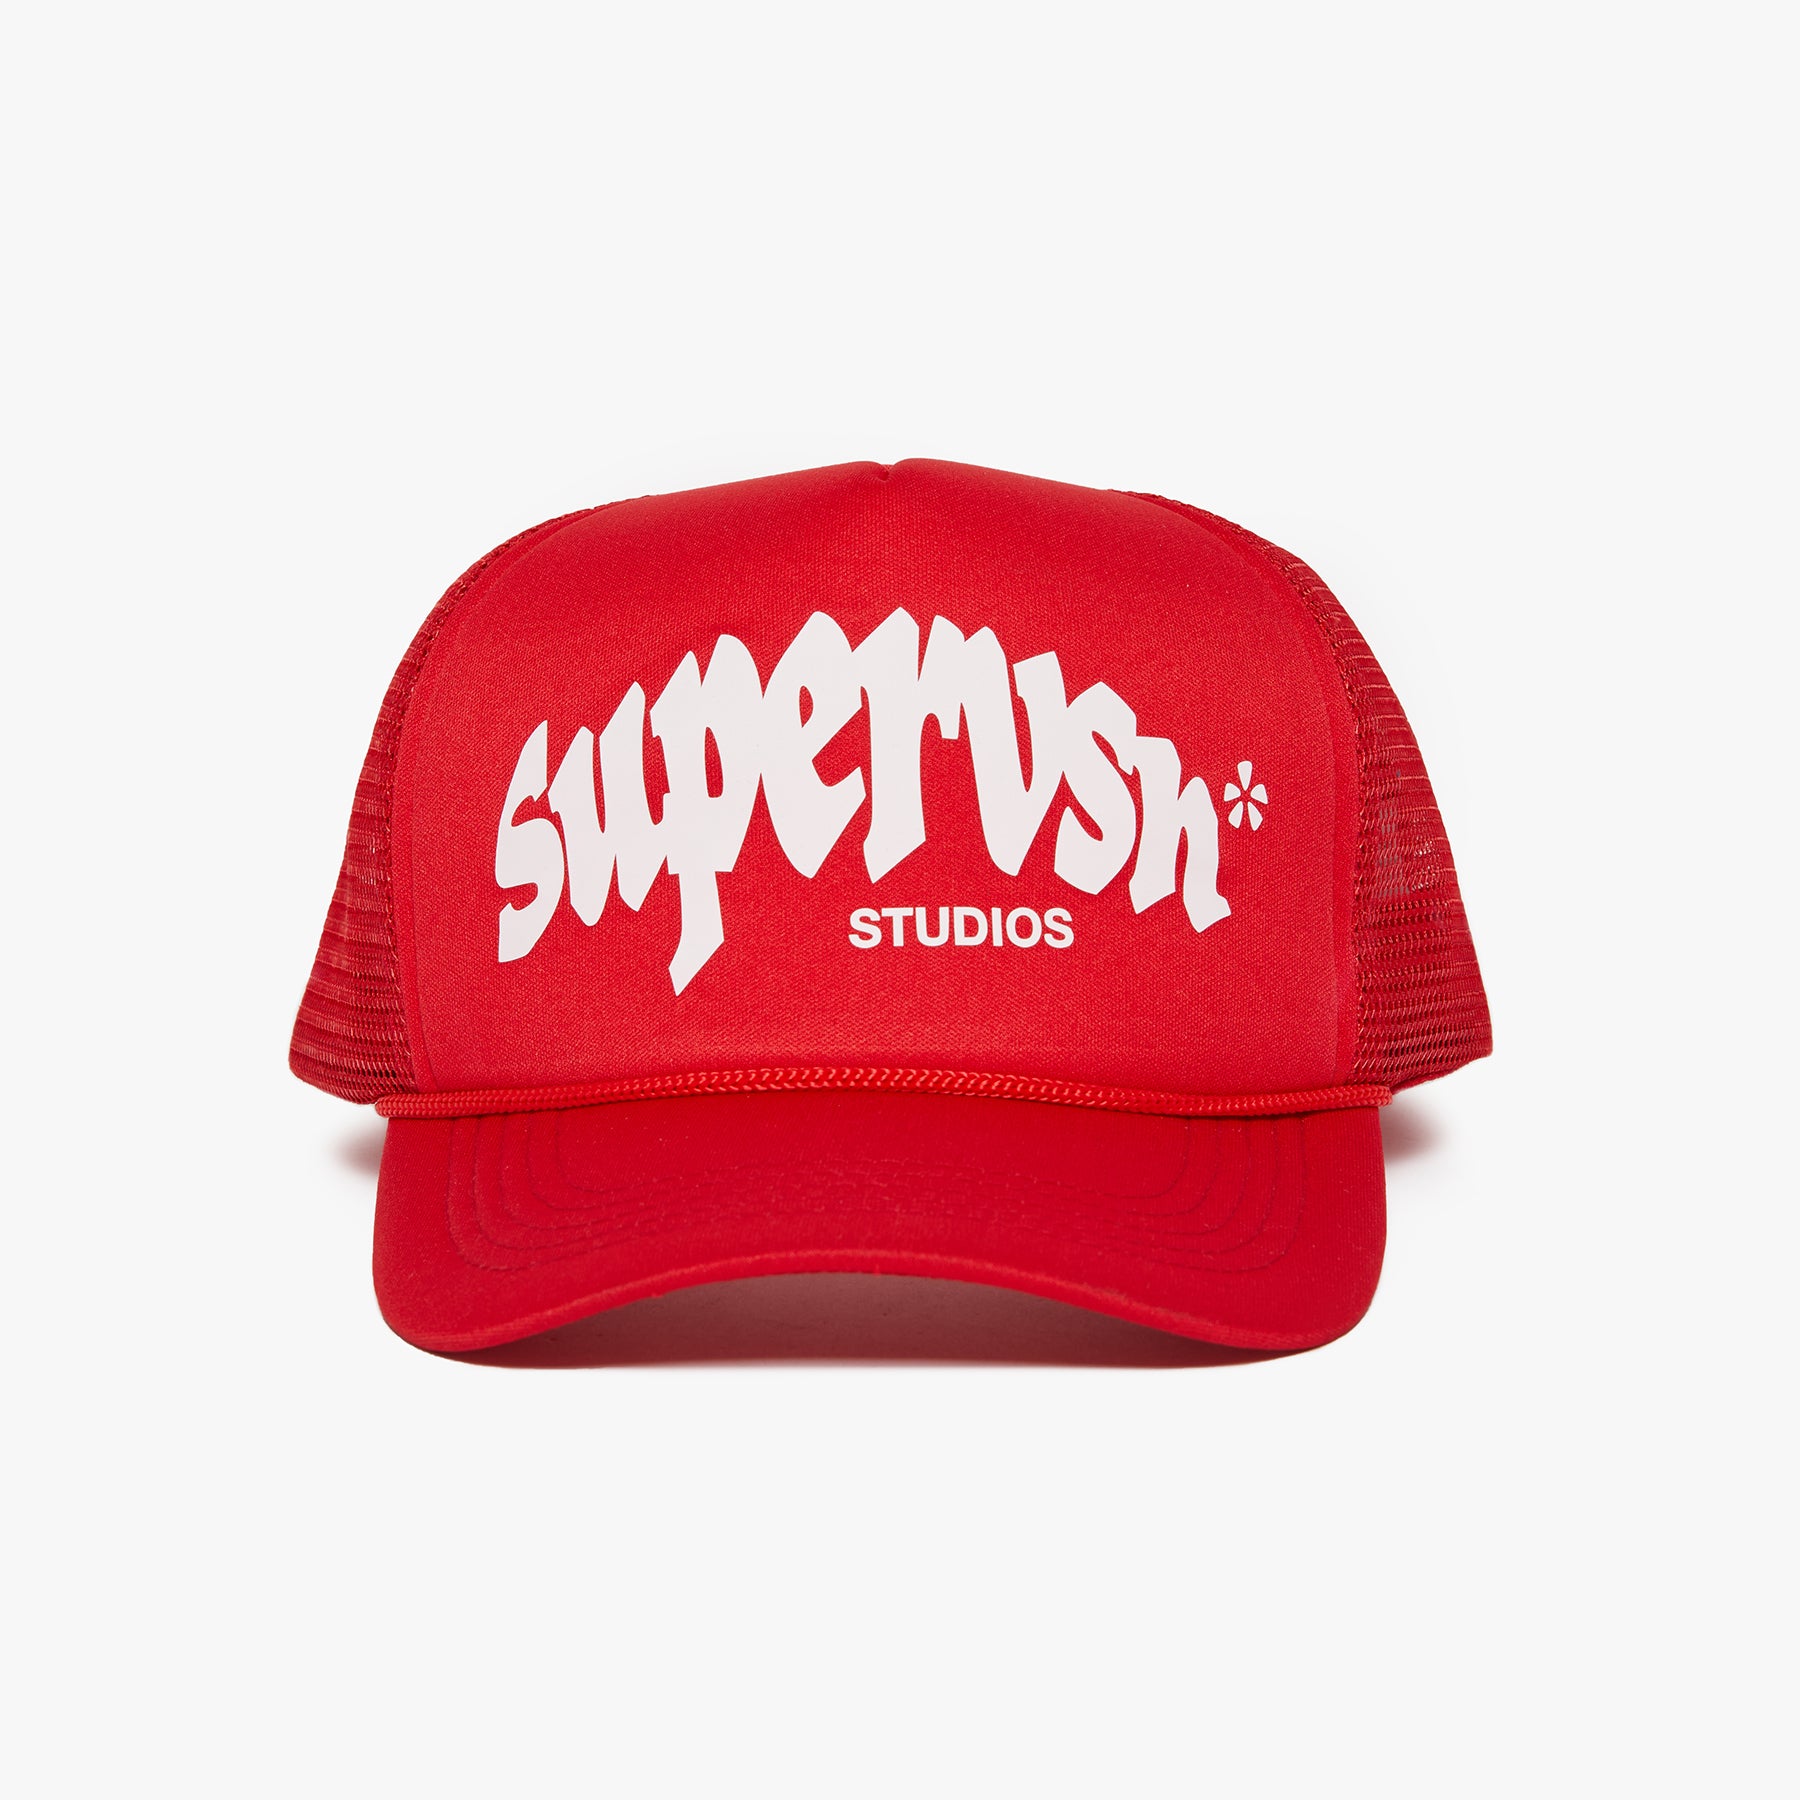 OG L.A. Trucker Hat (Red) – Product of LA